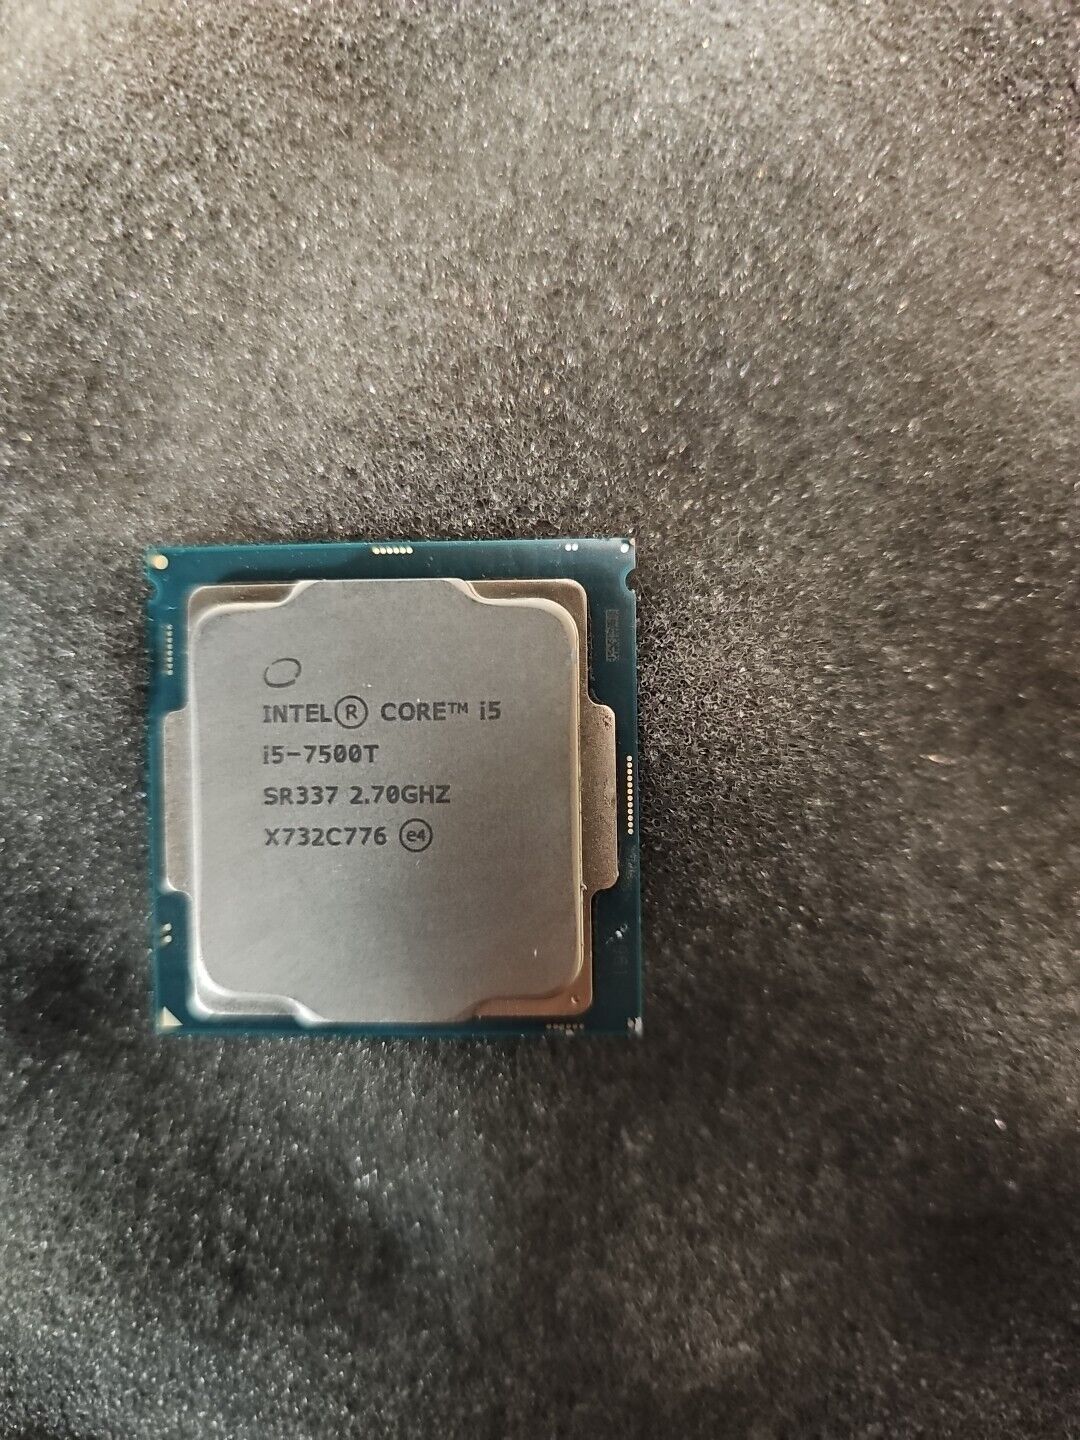 Intel Core i5-7500T - 2.7 GHz Quad-Core (SR337) Processor